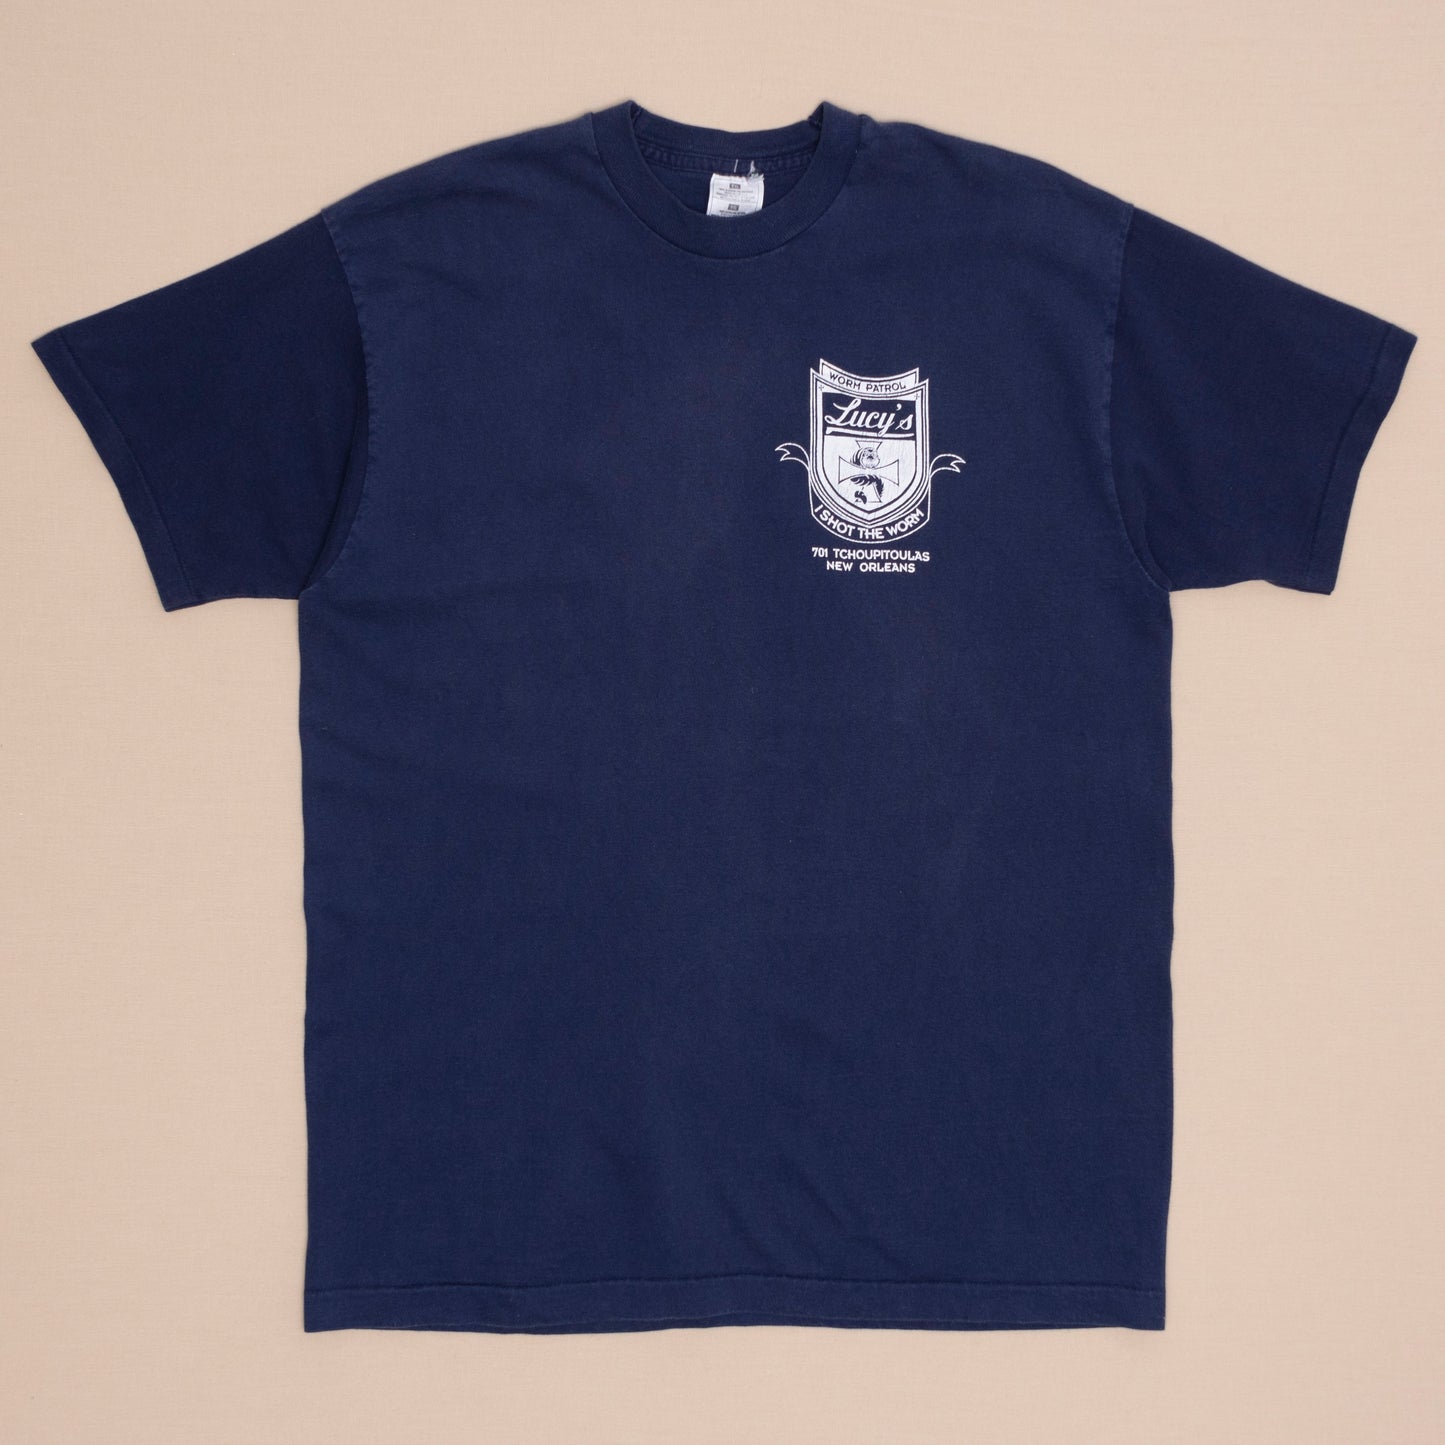 Lucy's Worm Patrol T Shirt, XL